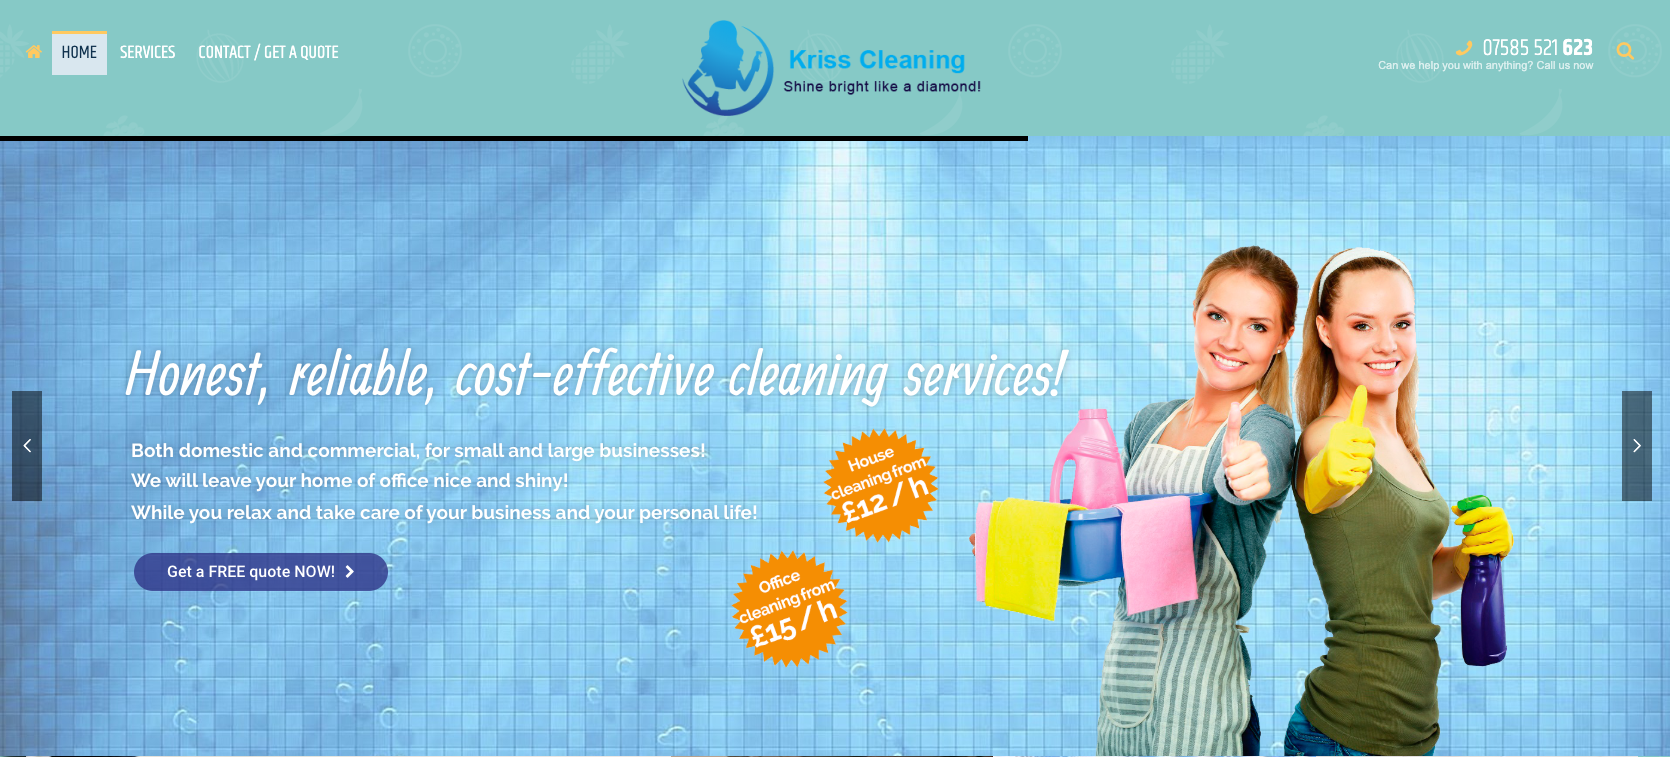 Kriss Cleaning Bristol